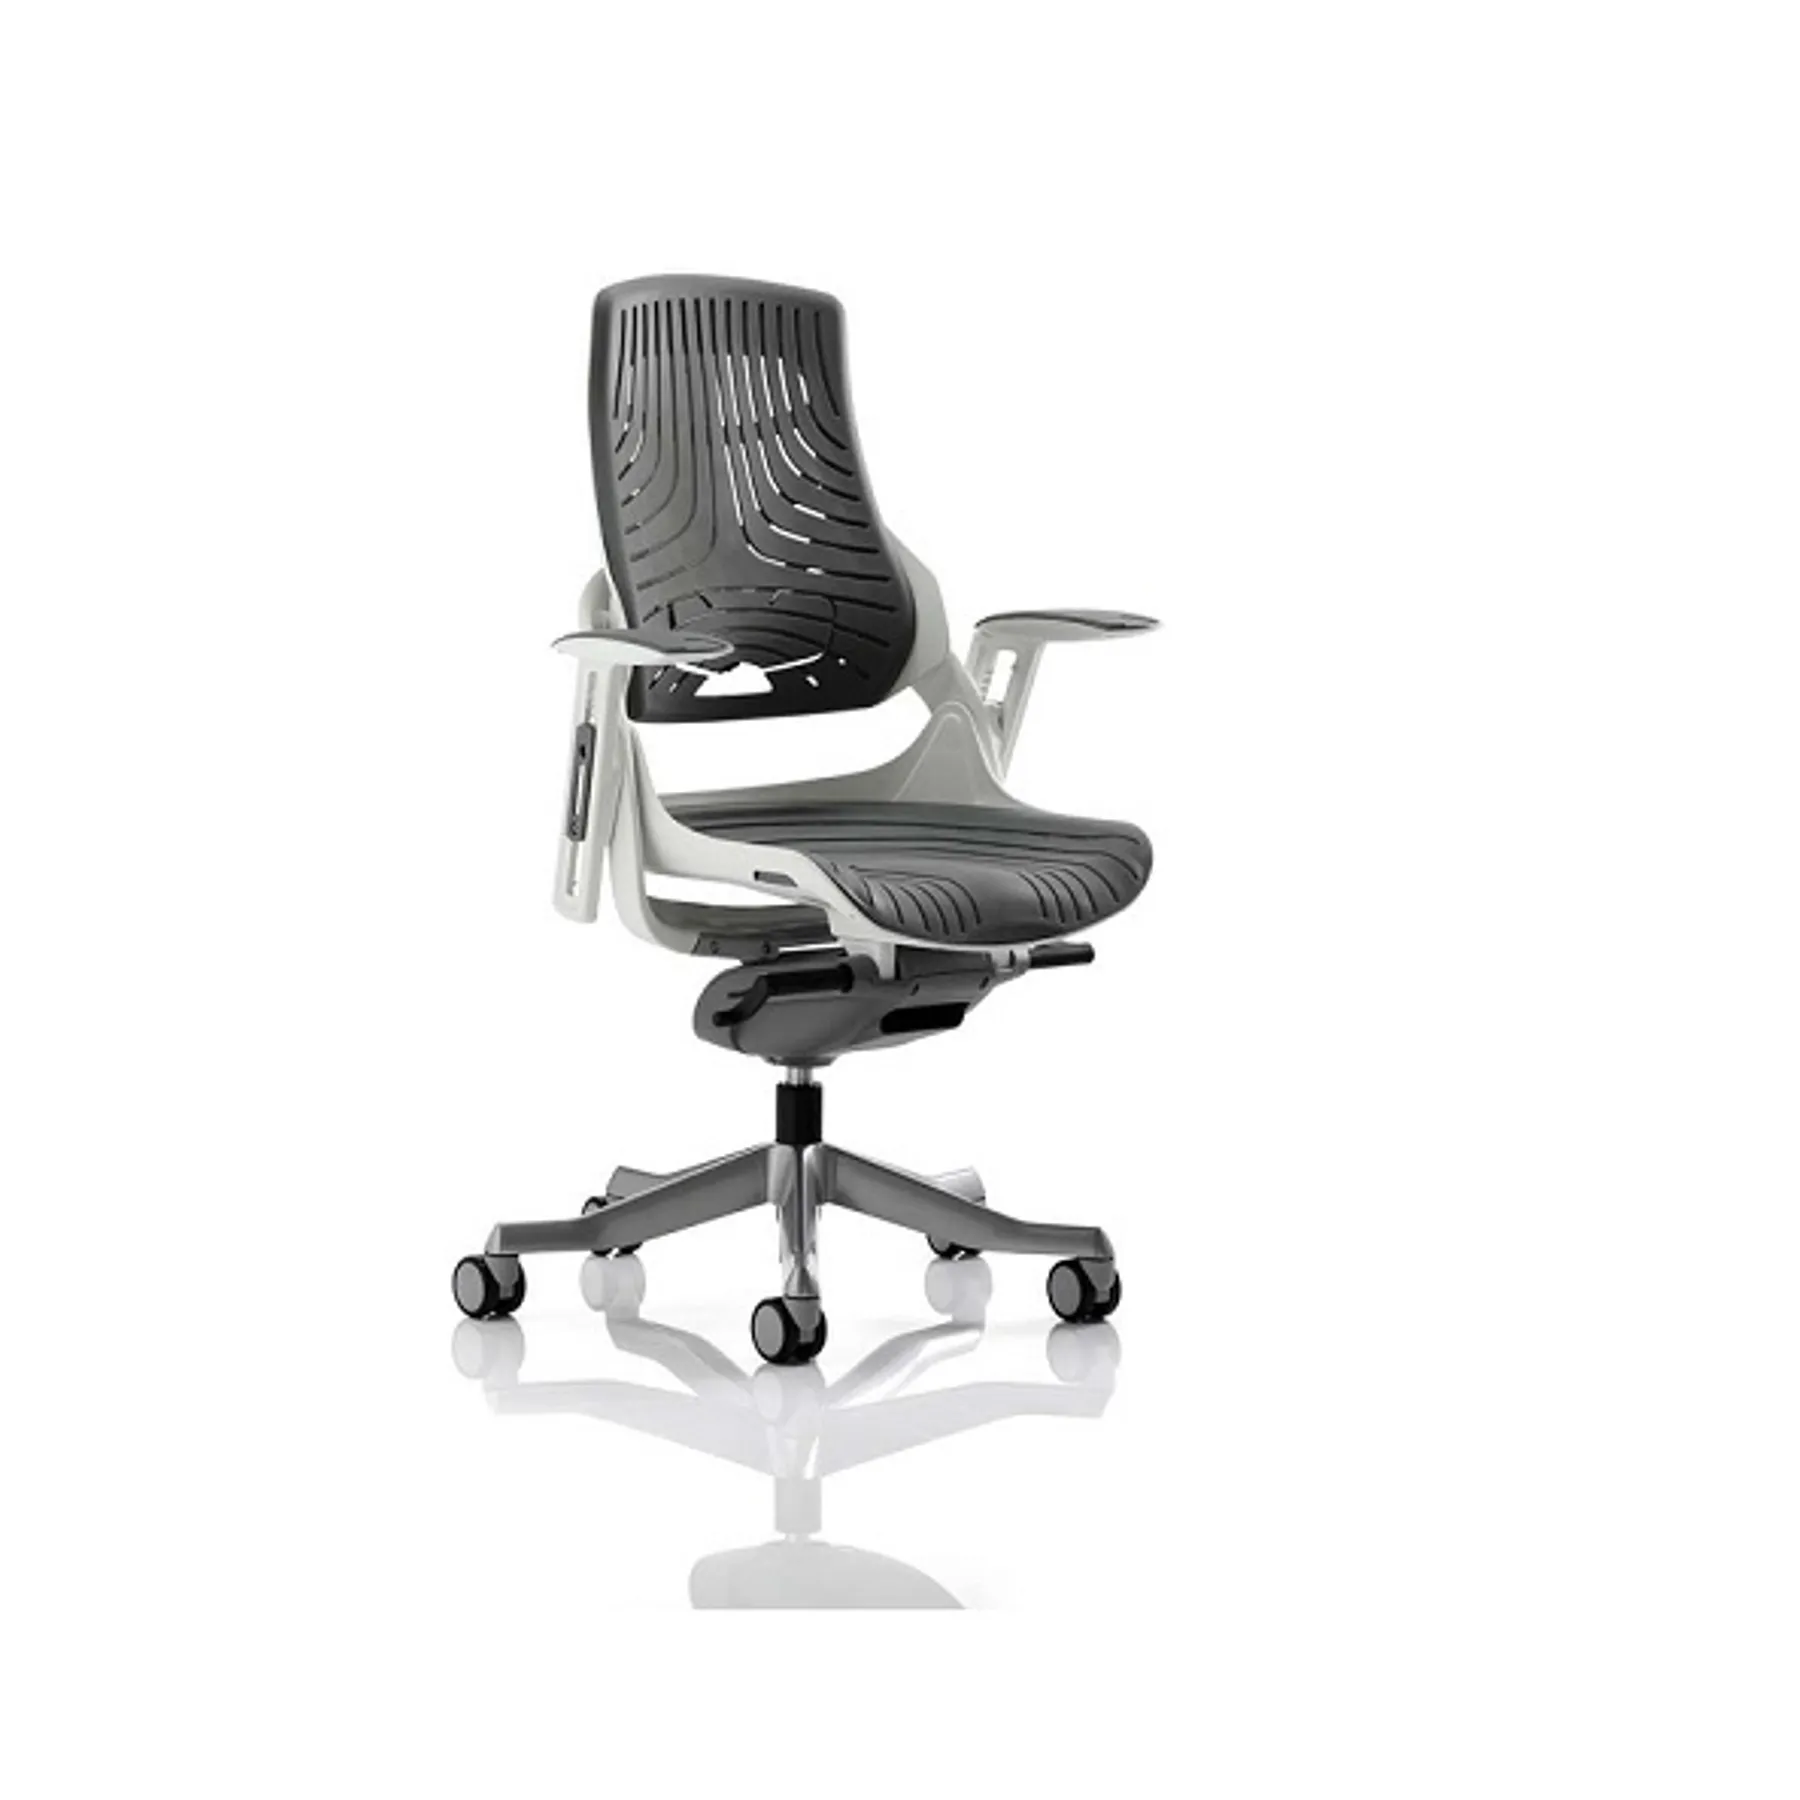 Lof Direct Dynamic zure grey elastomer white frame executive chair no headrest